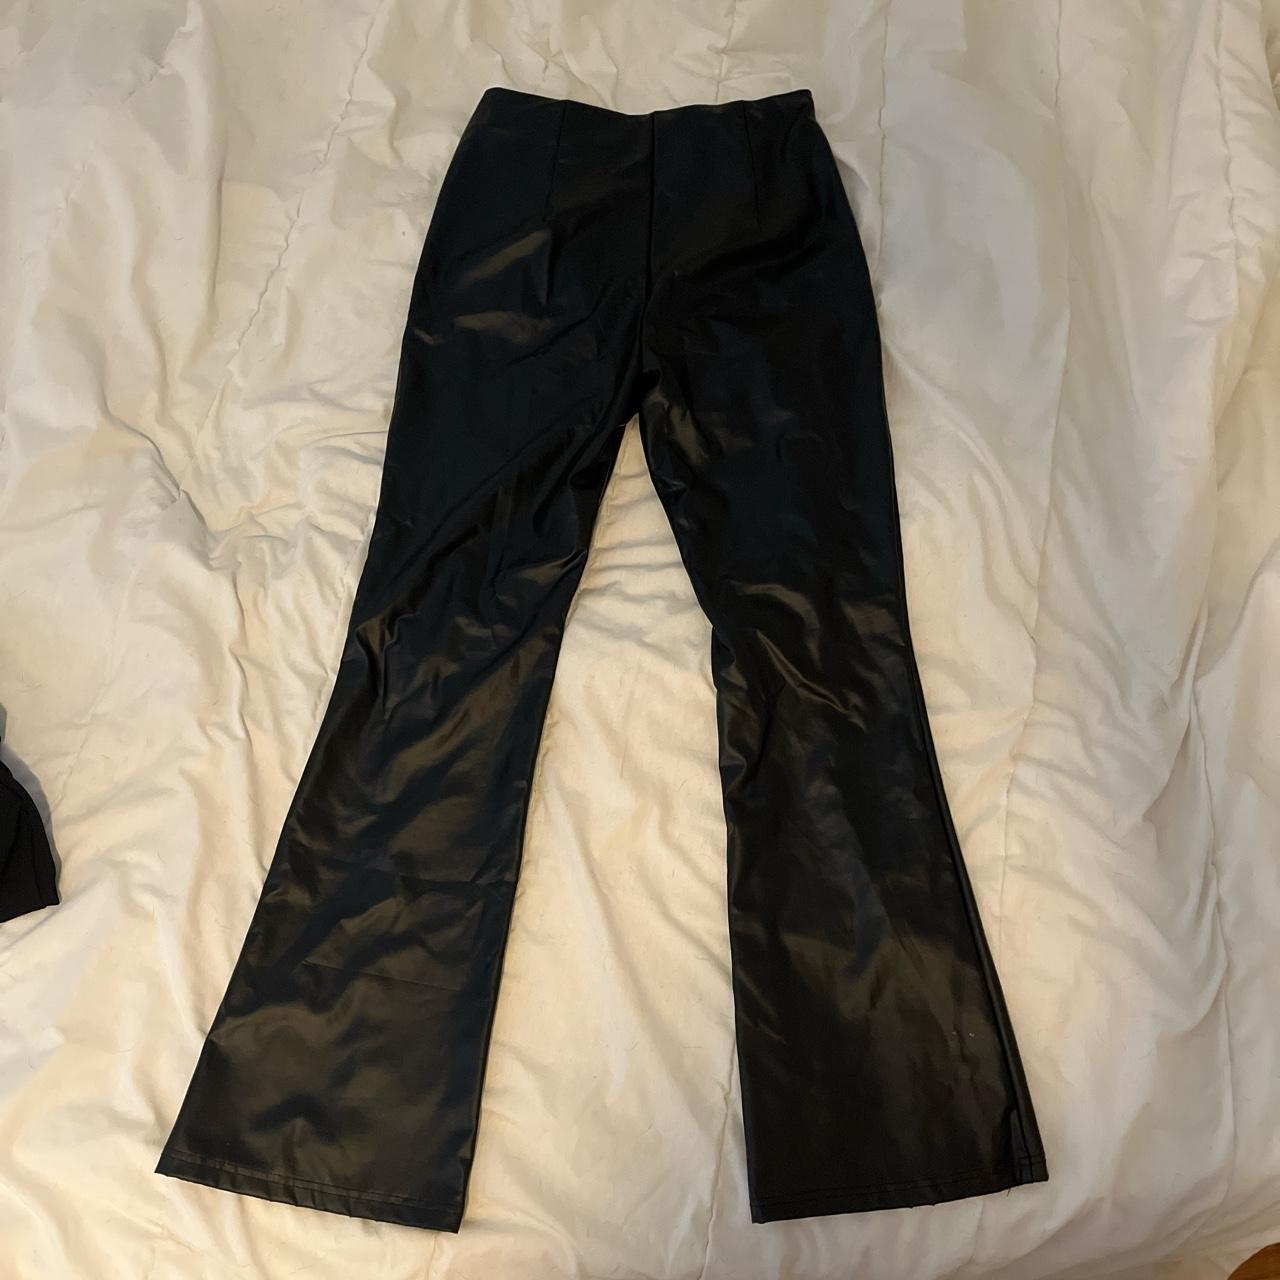 black leather flare leg pants - Depop